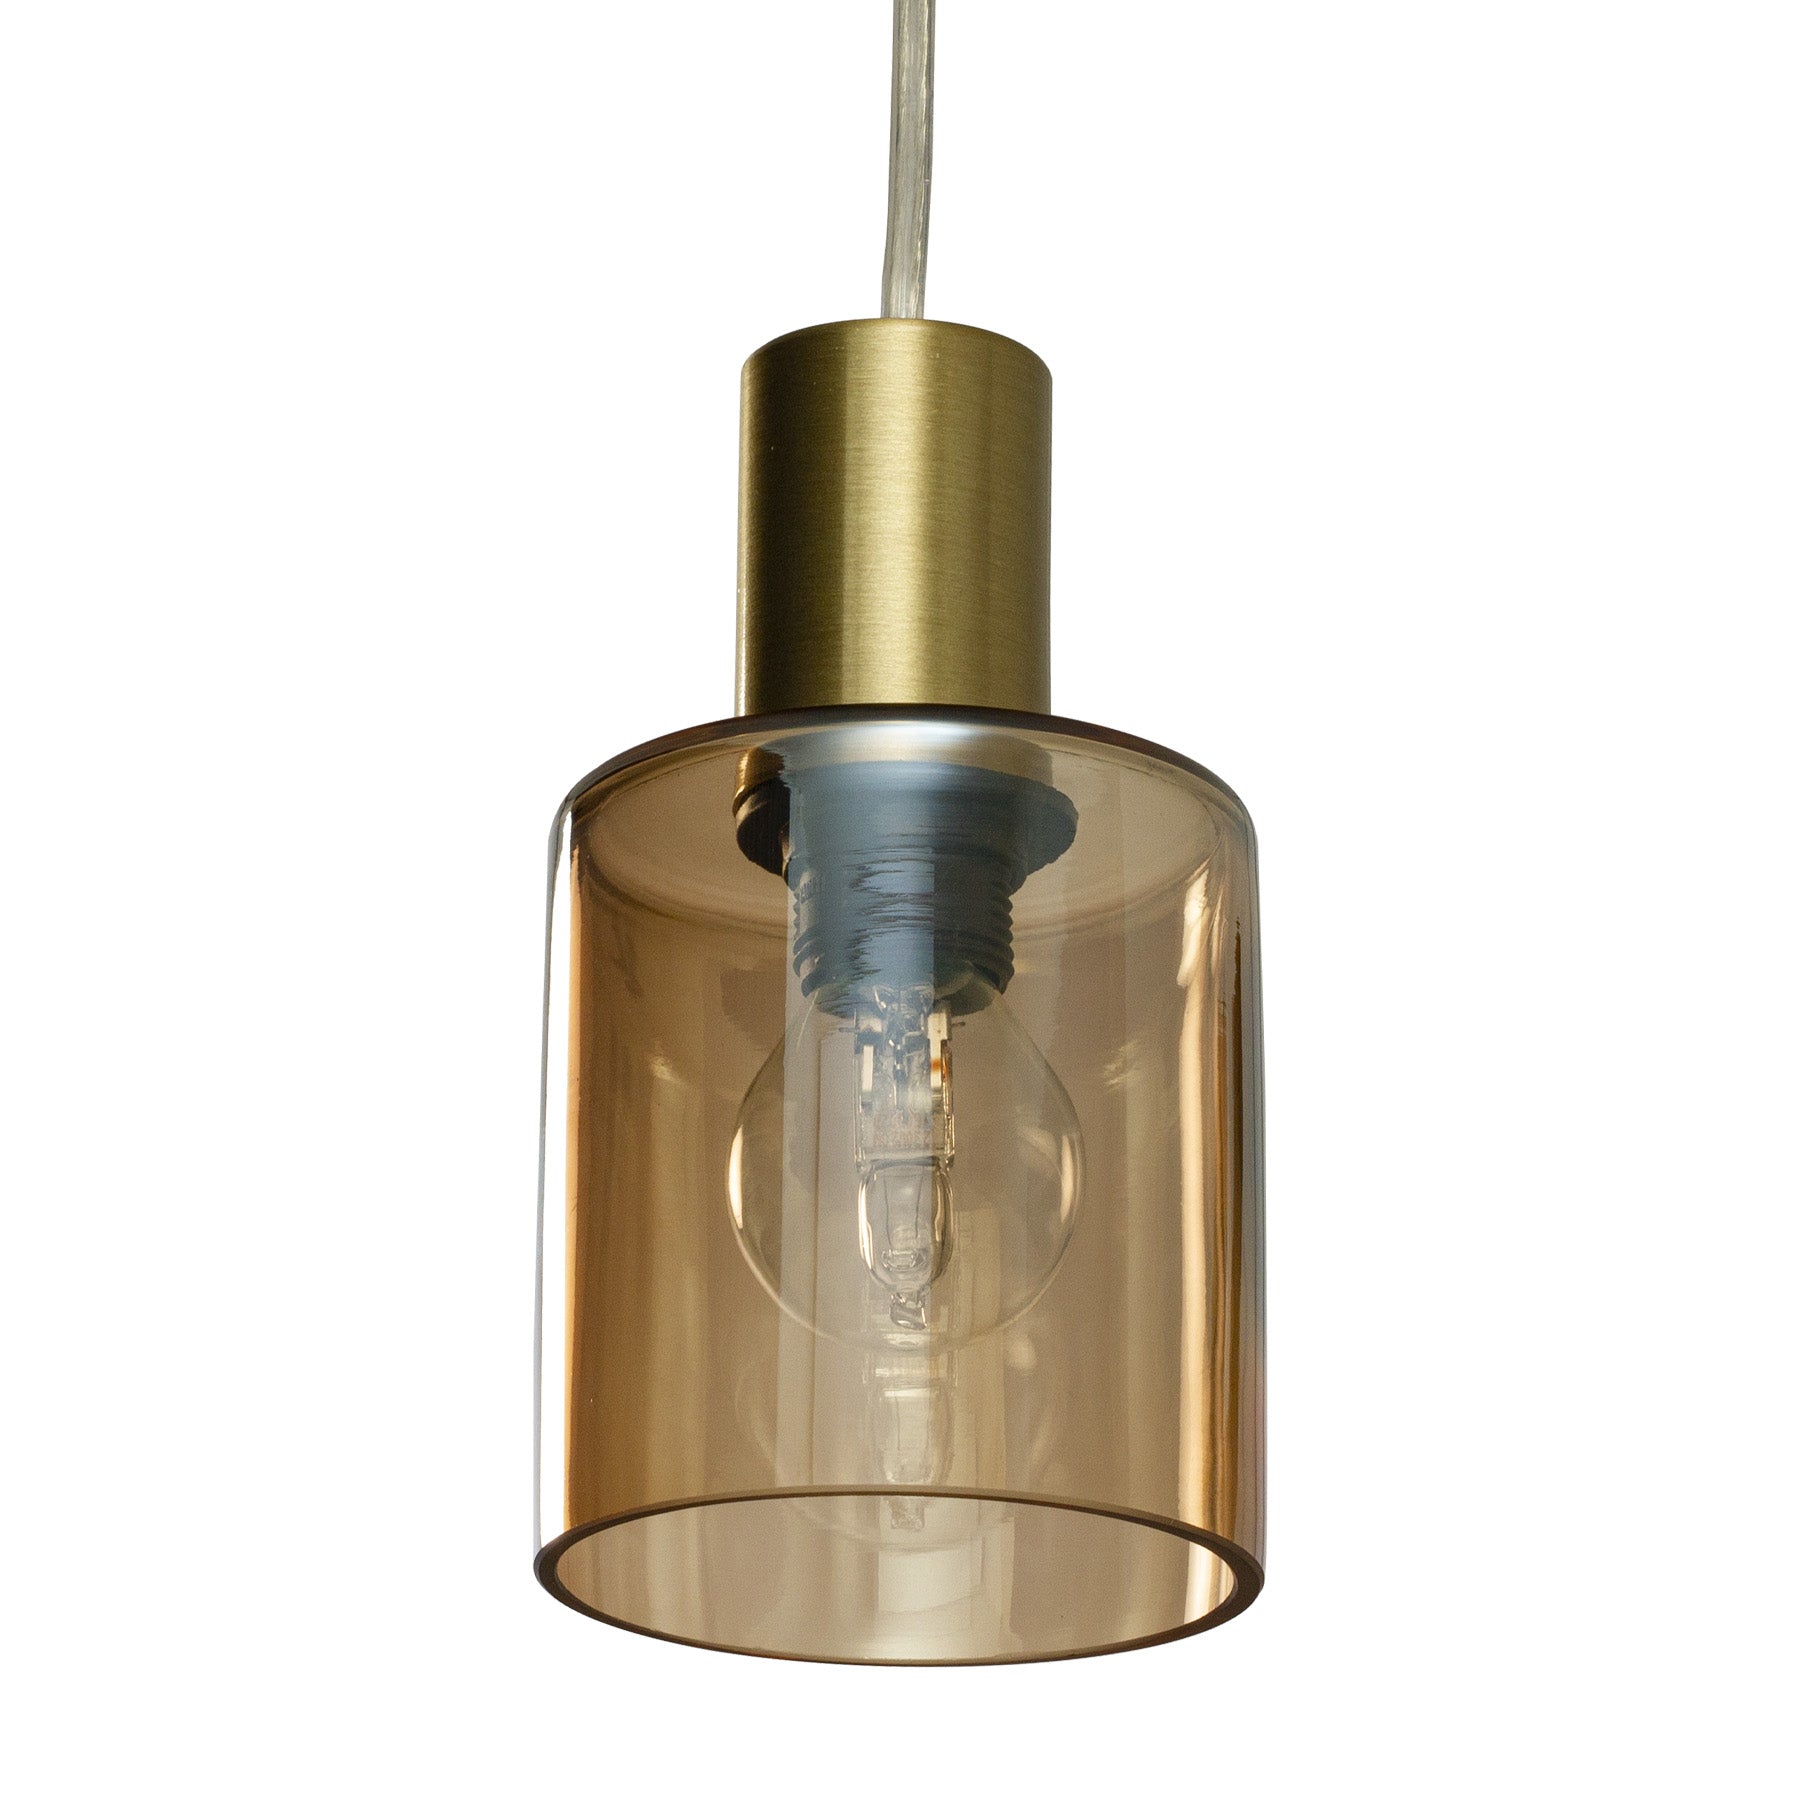 Cylinder vinduspendel laget i messing og amber glass med lang ledning, bryter og hullbrikke - Aneta belysning